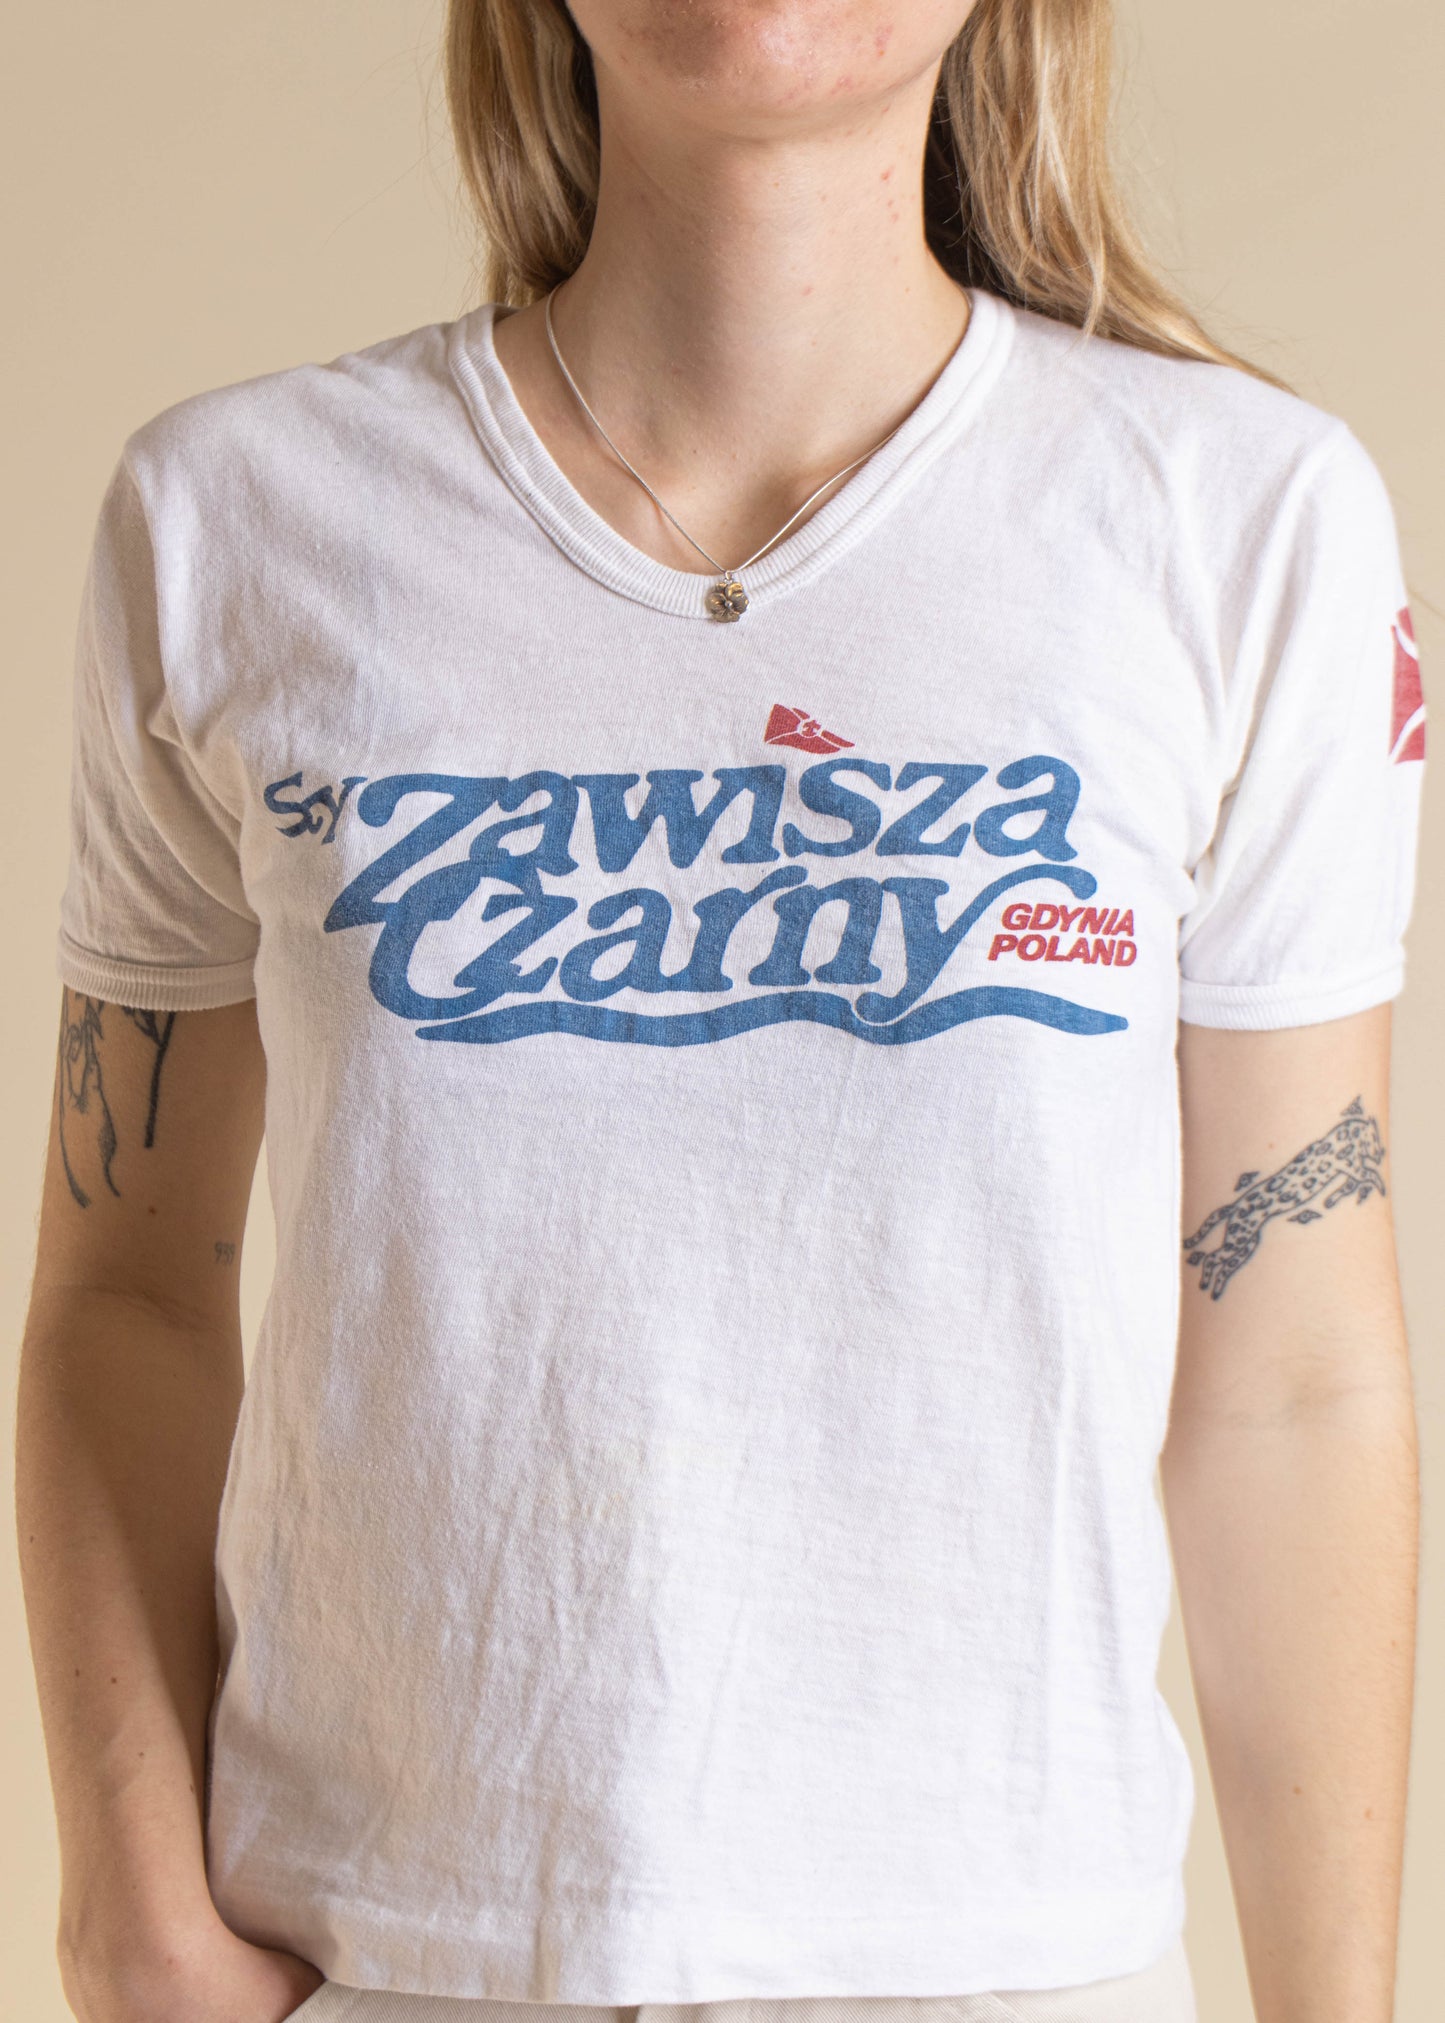 1970s Butterfly Poland Souvenir Ringer T-Shirt Size XS/S